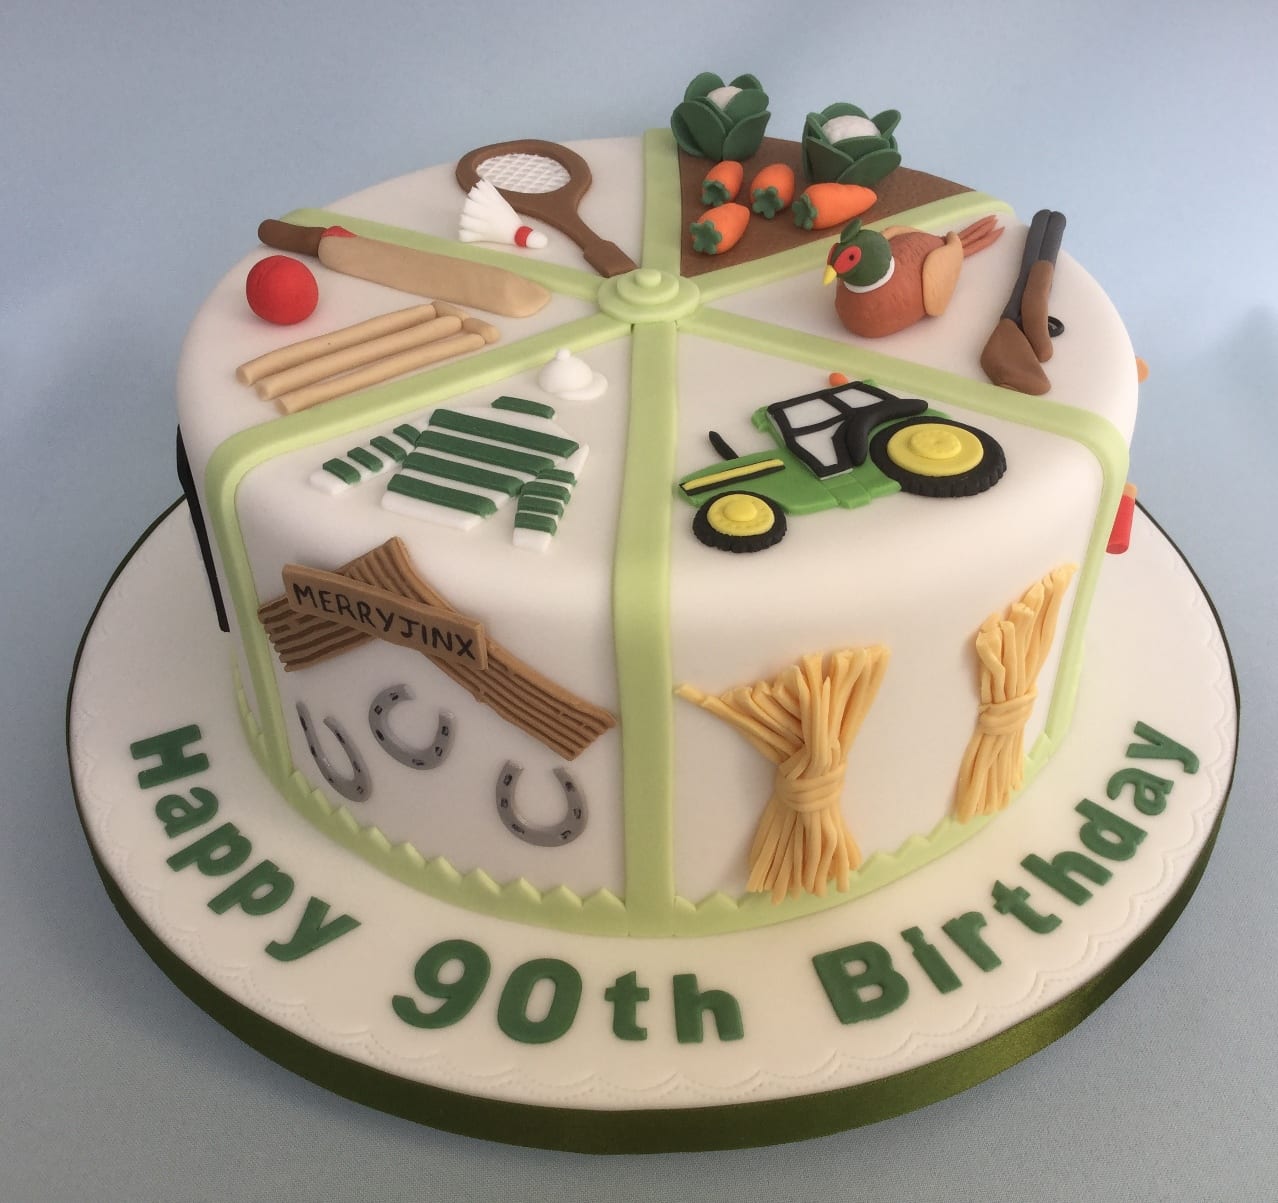 Happy 90th birthday cake topper svg, 90th birthday svg